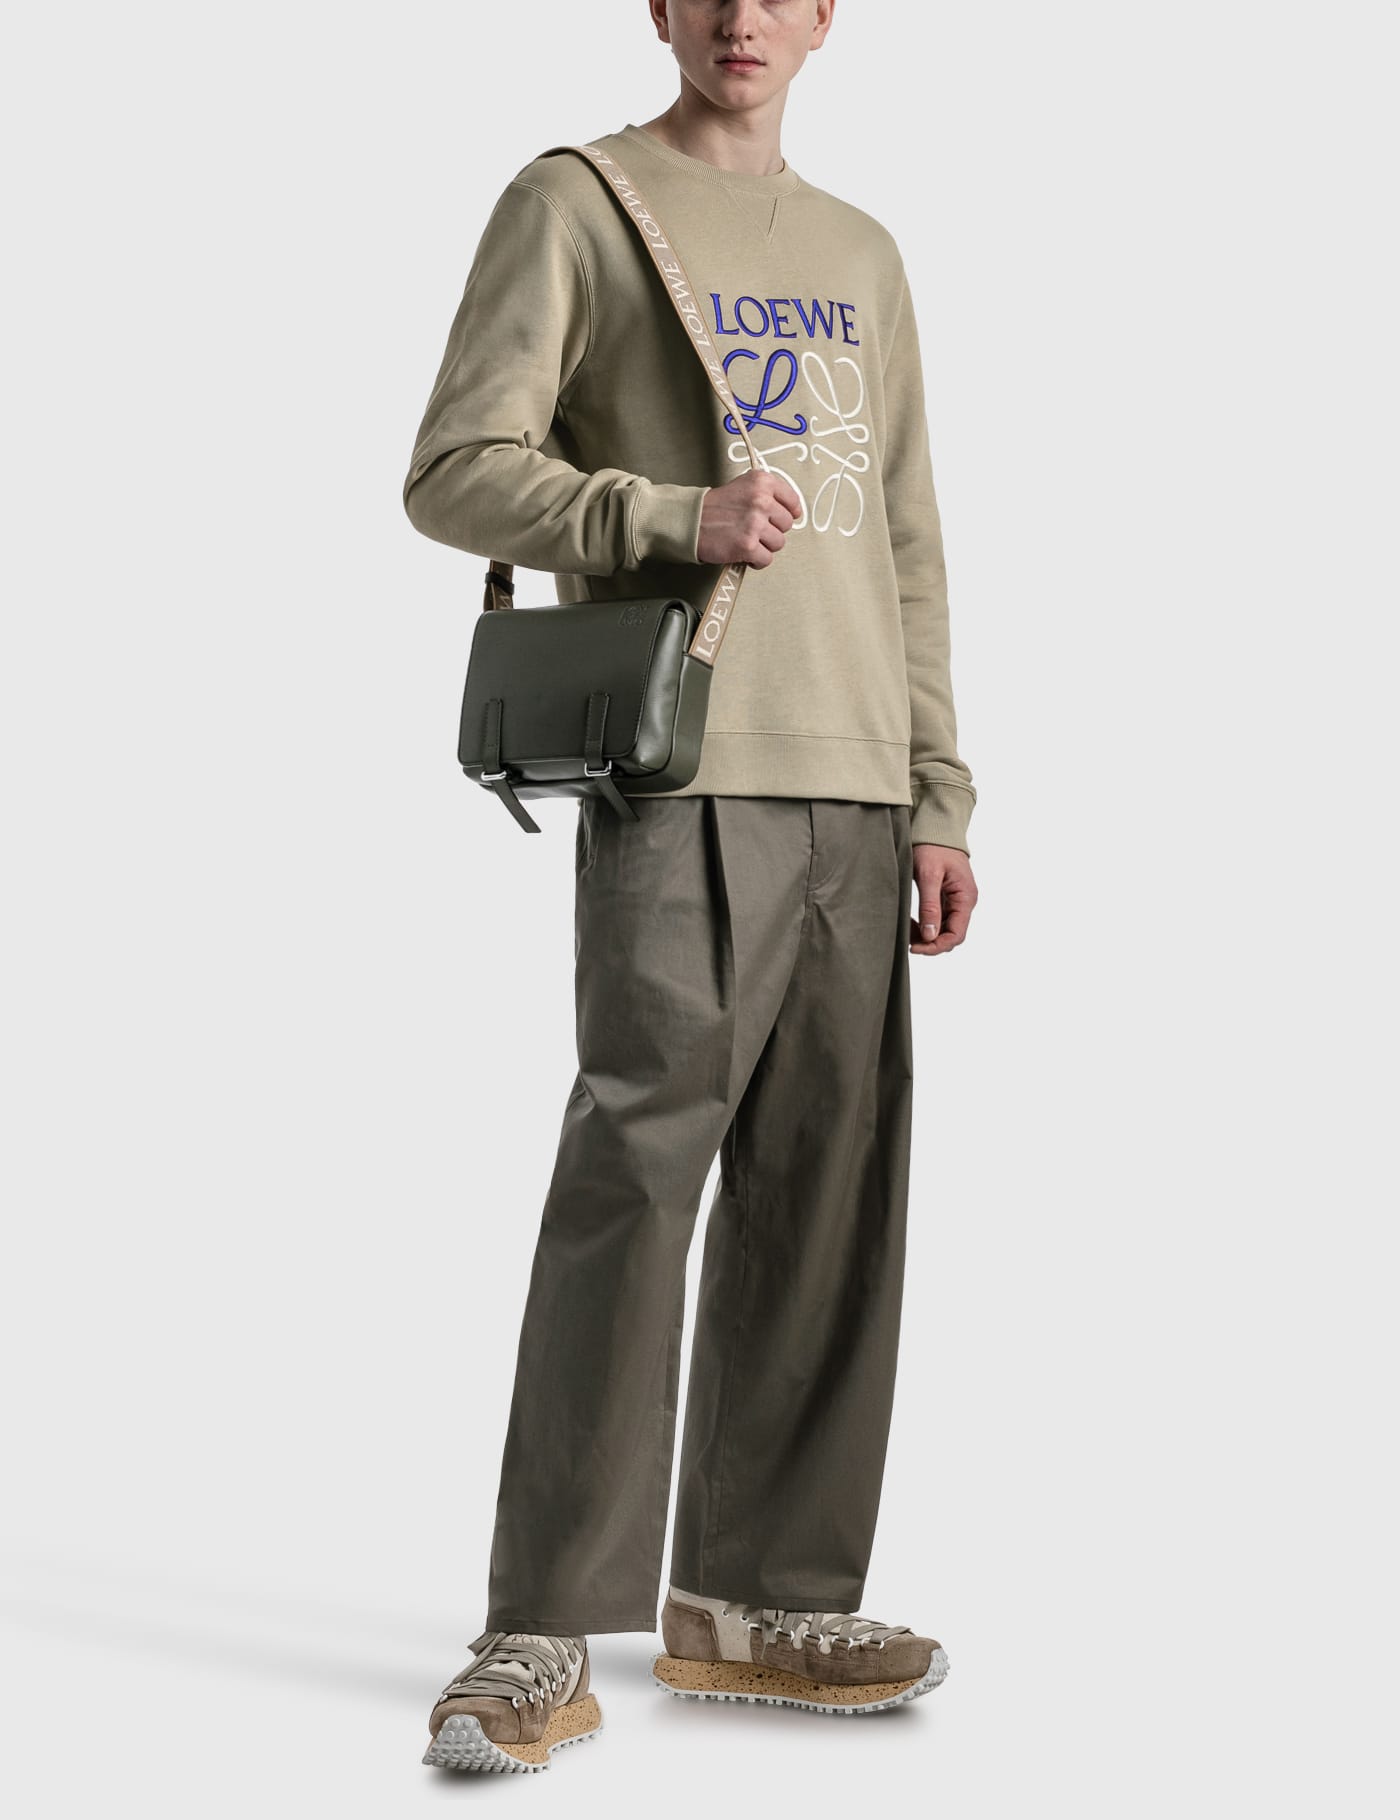 Loewe - Anagram Sweatshirt | HBX - Globally Curated Fashion and 